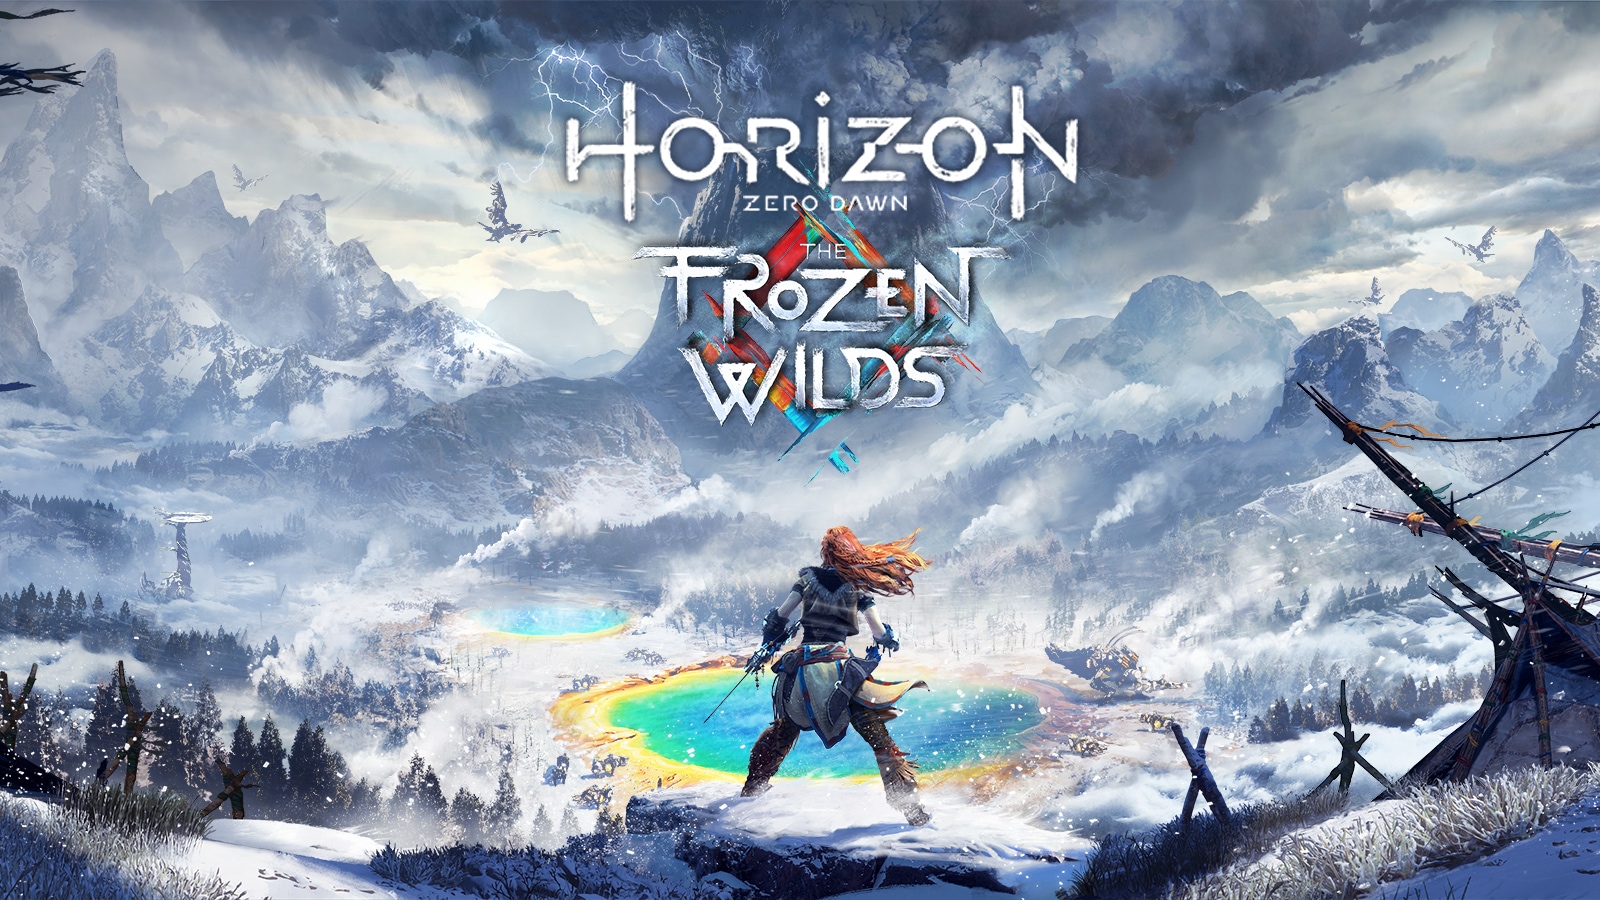 Horizon Zero Dawn: The Frozen Wilds PSN Key PS4 NORTH AMERICA - 2